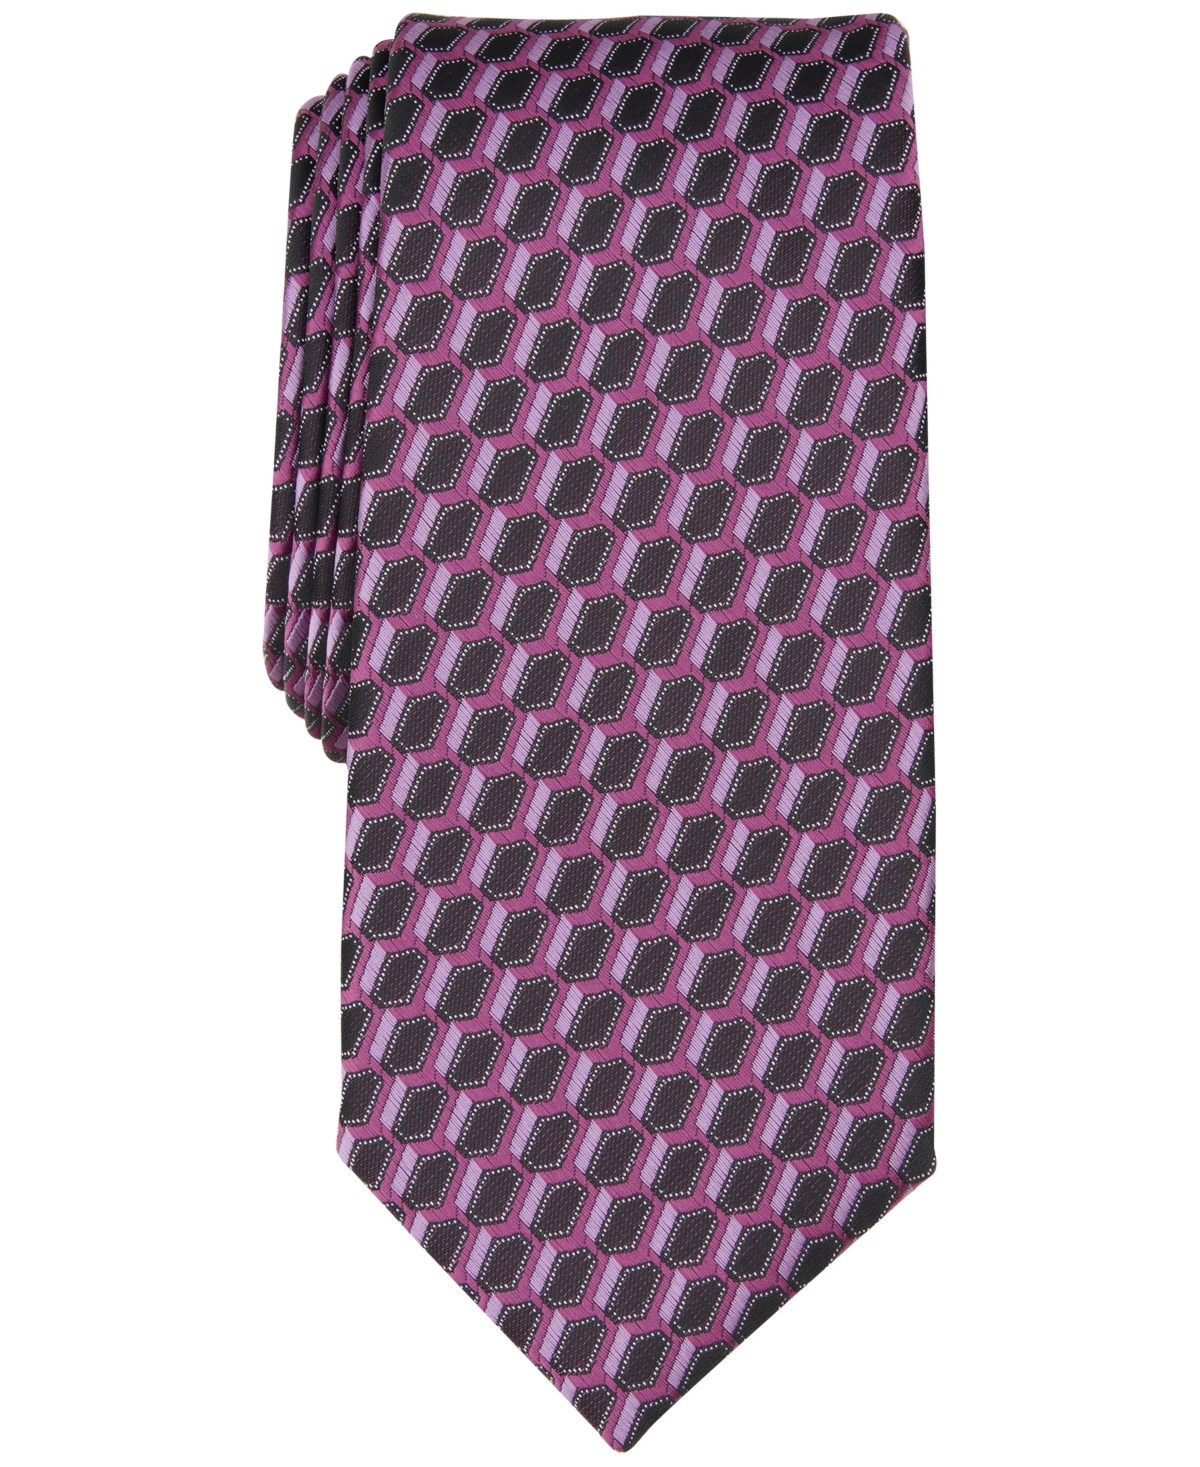 Men's Empire Geo-Print Tie, Created for Macy's - Pink